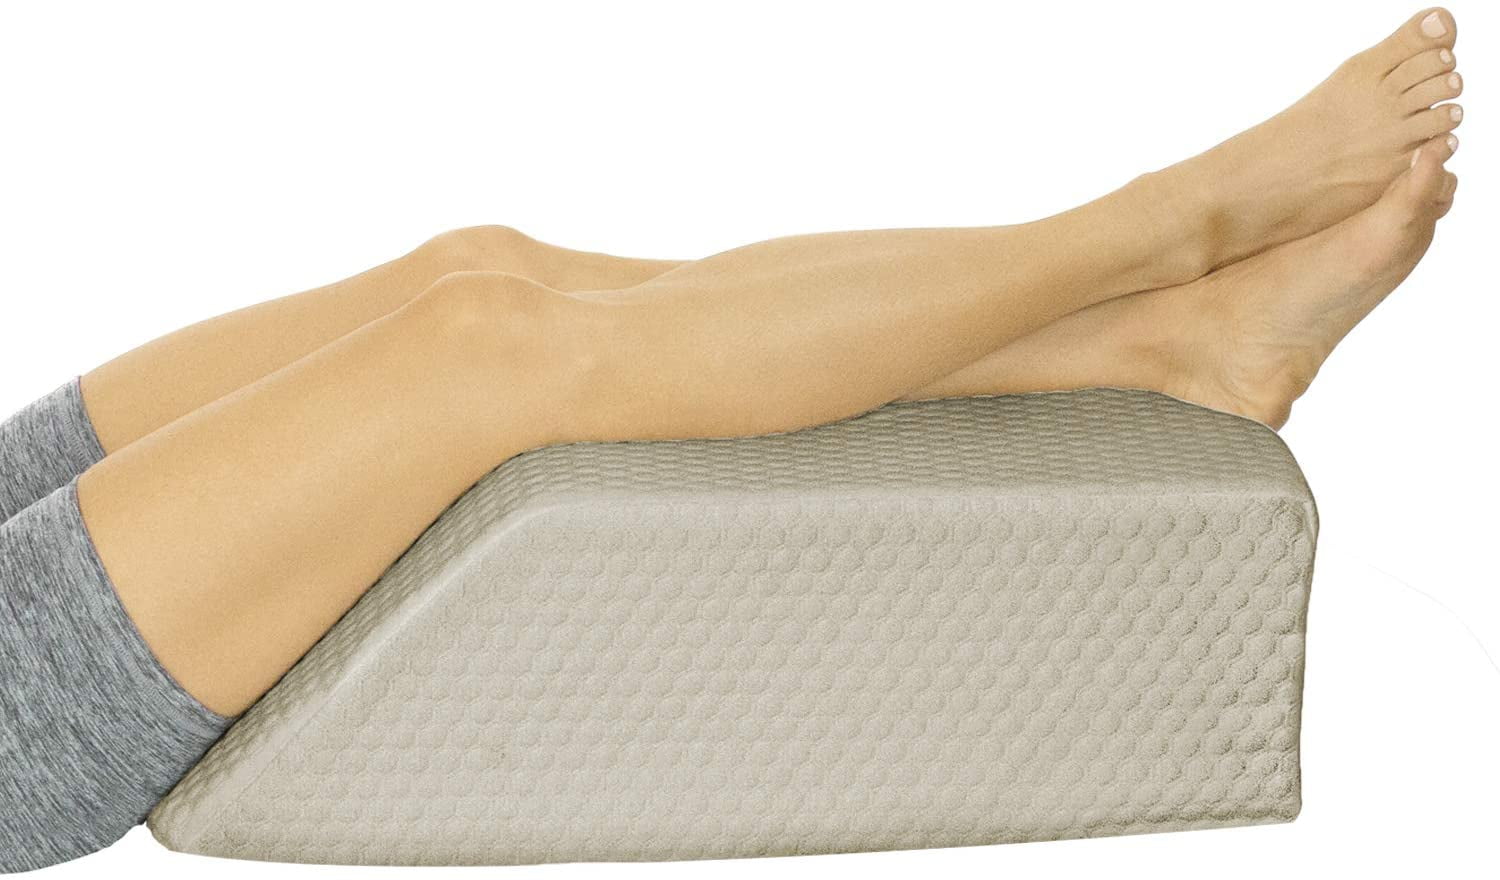 Leg Elevation Wedge Elevator Ortho Pillow Rest Improve Circulation Back Pain DMI for sale online 